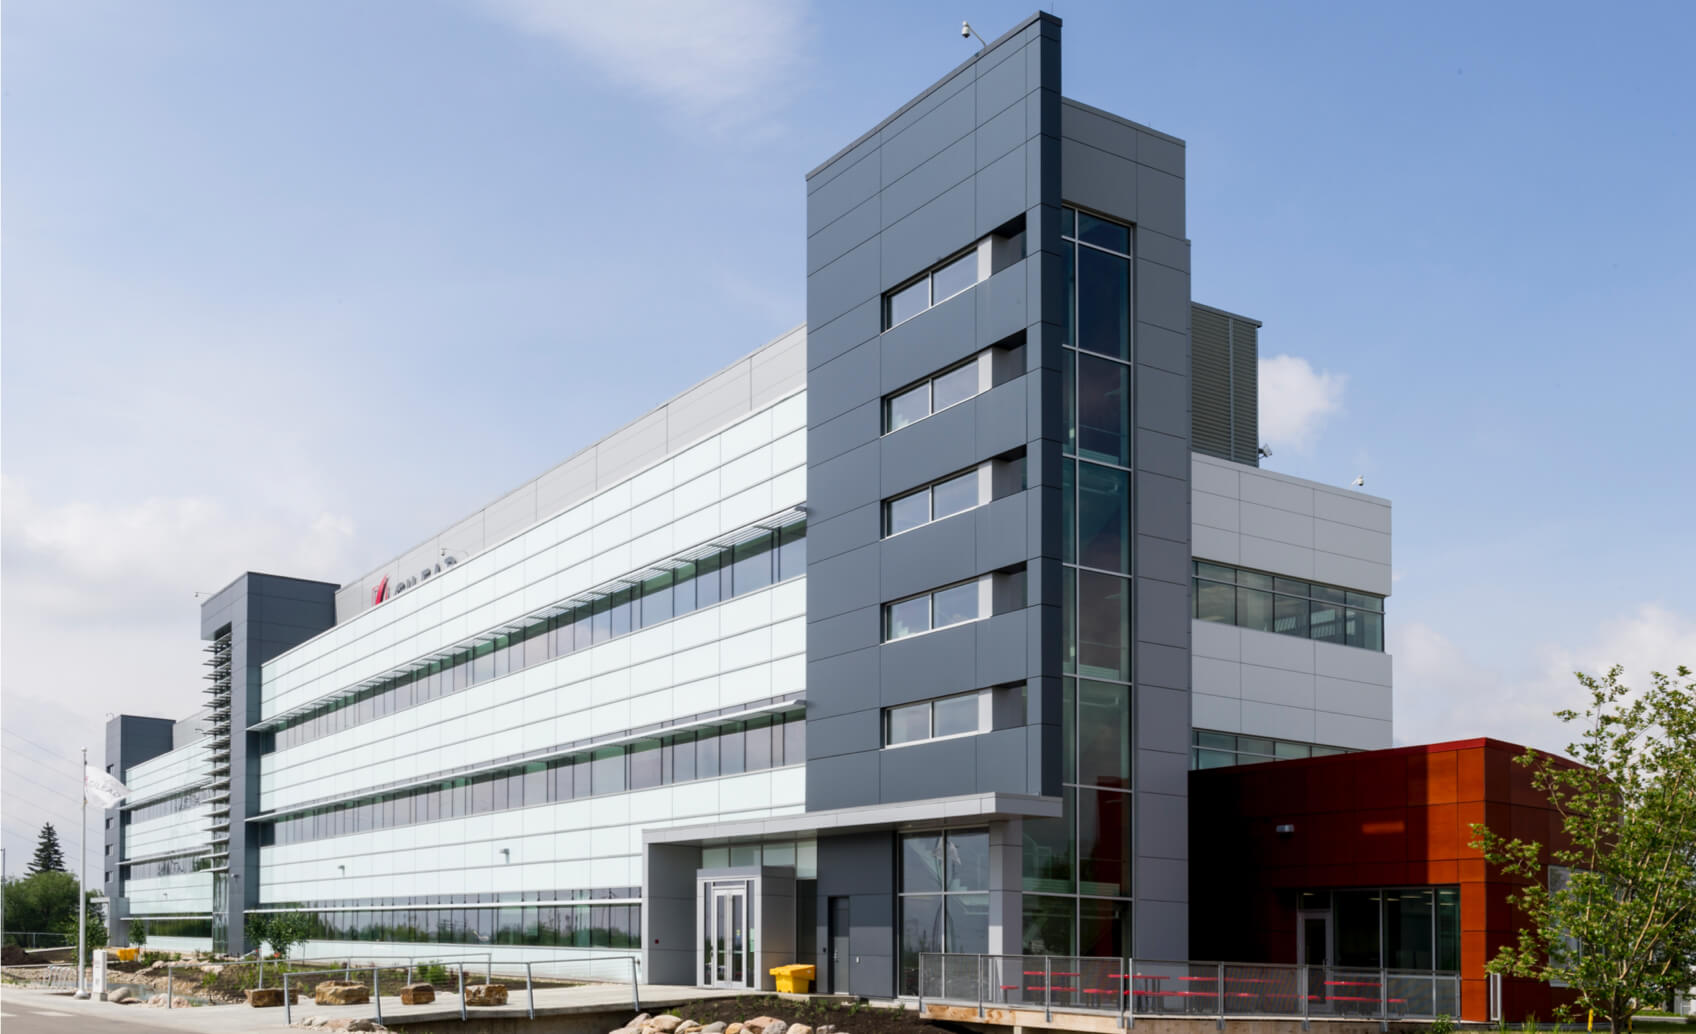 Gilead Alberta’s Manufacturing Facility, located in Edmonton, Alberta, Canada